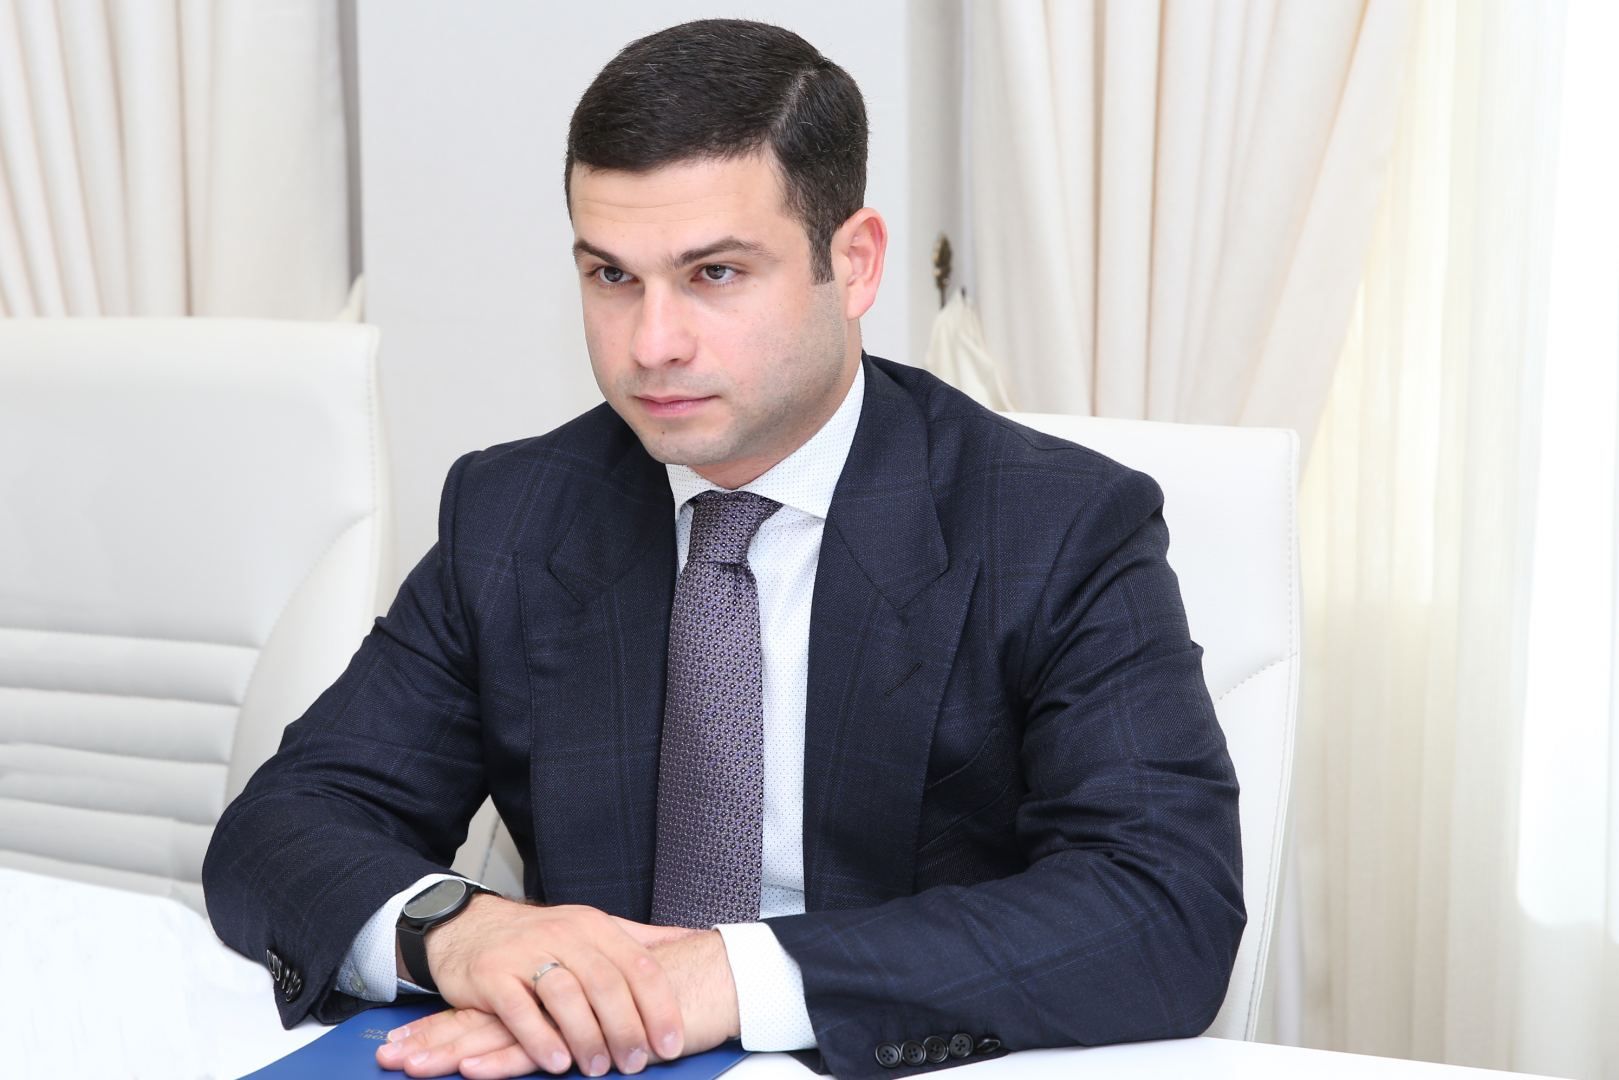 Official: Business to return again to Azerbaijan’s Lachin